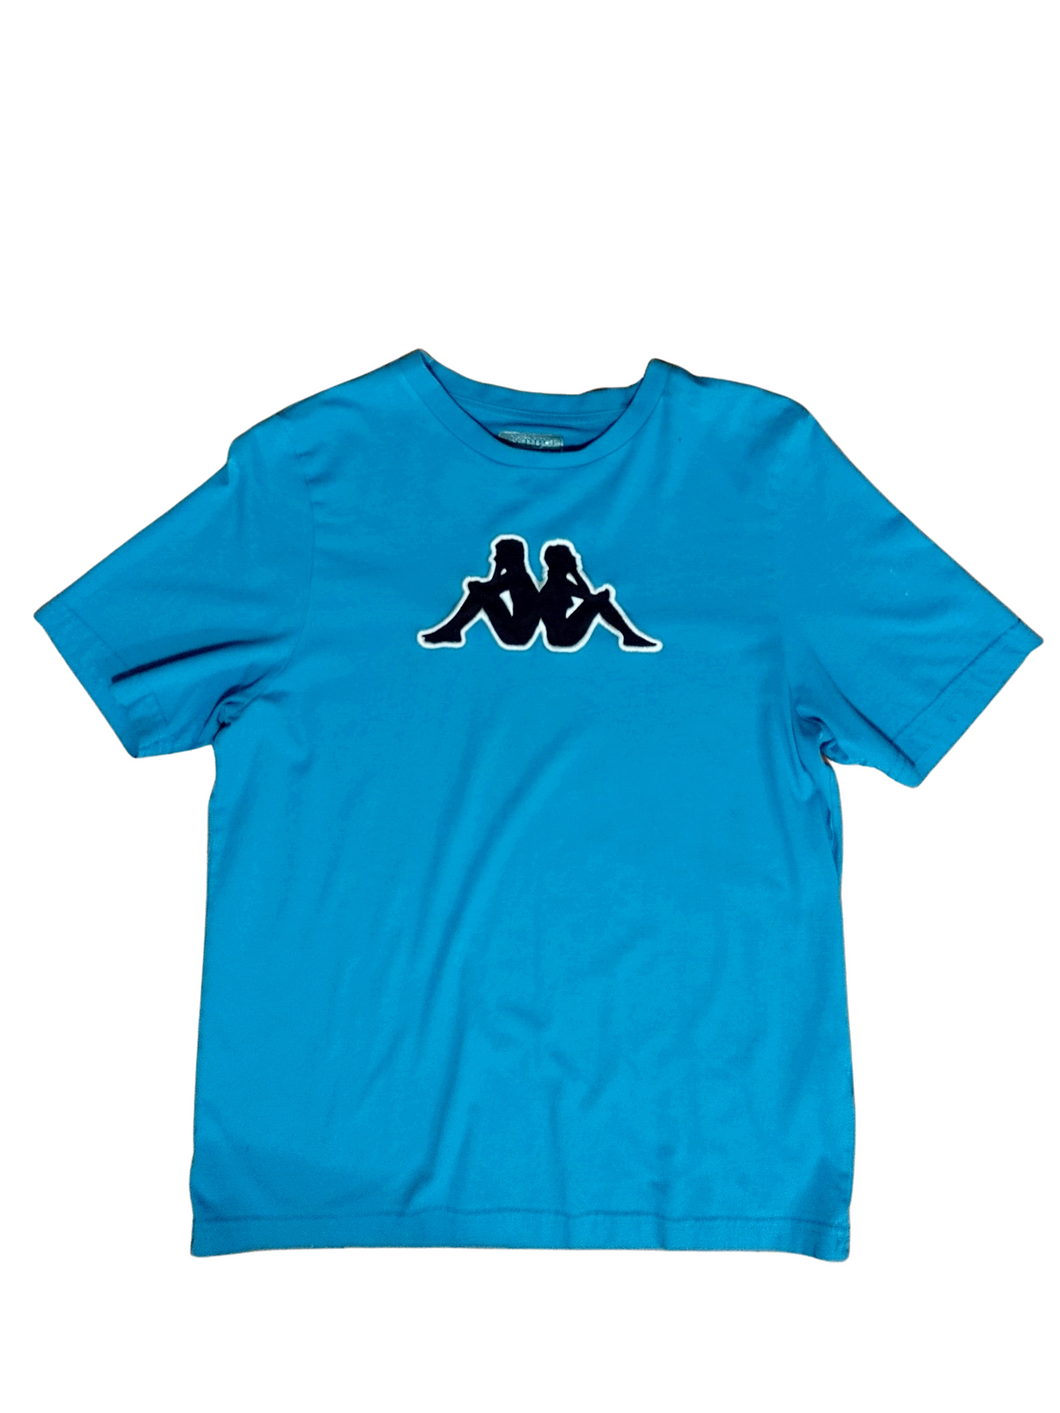 90s Kappa Logo T-Shirt - Size S